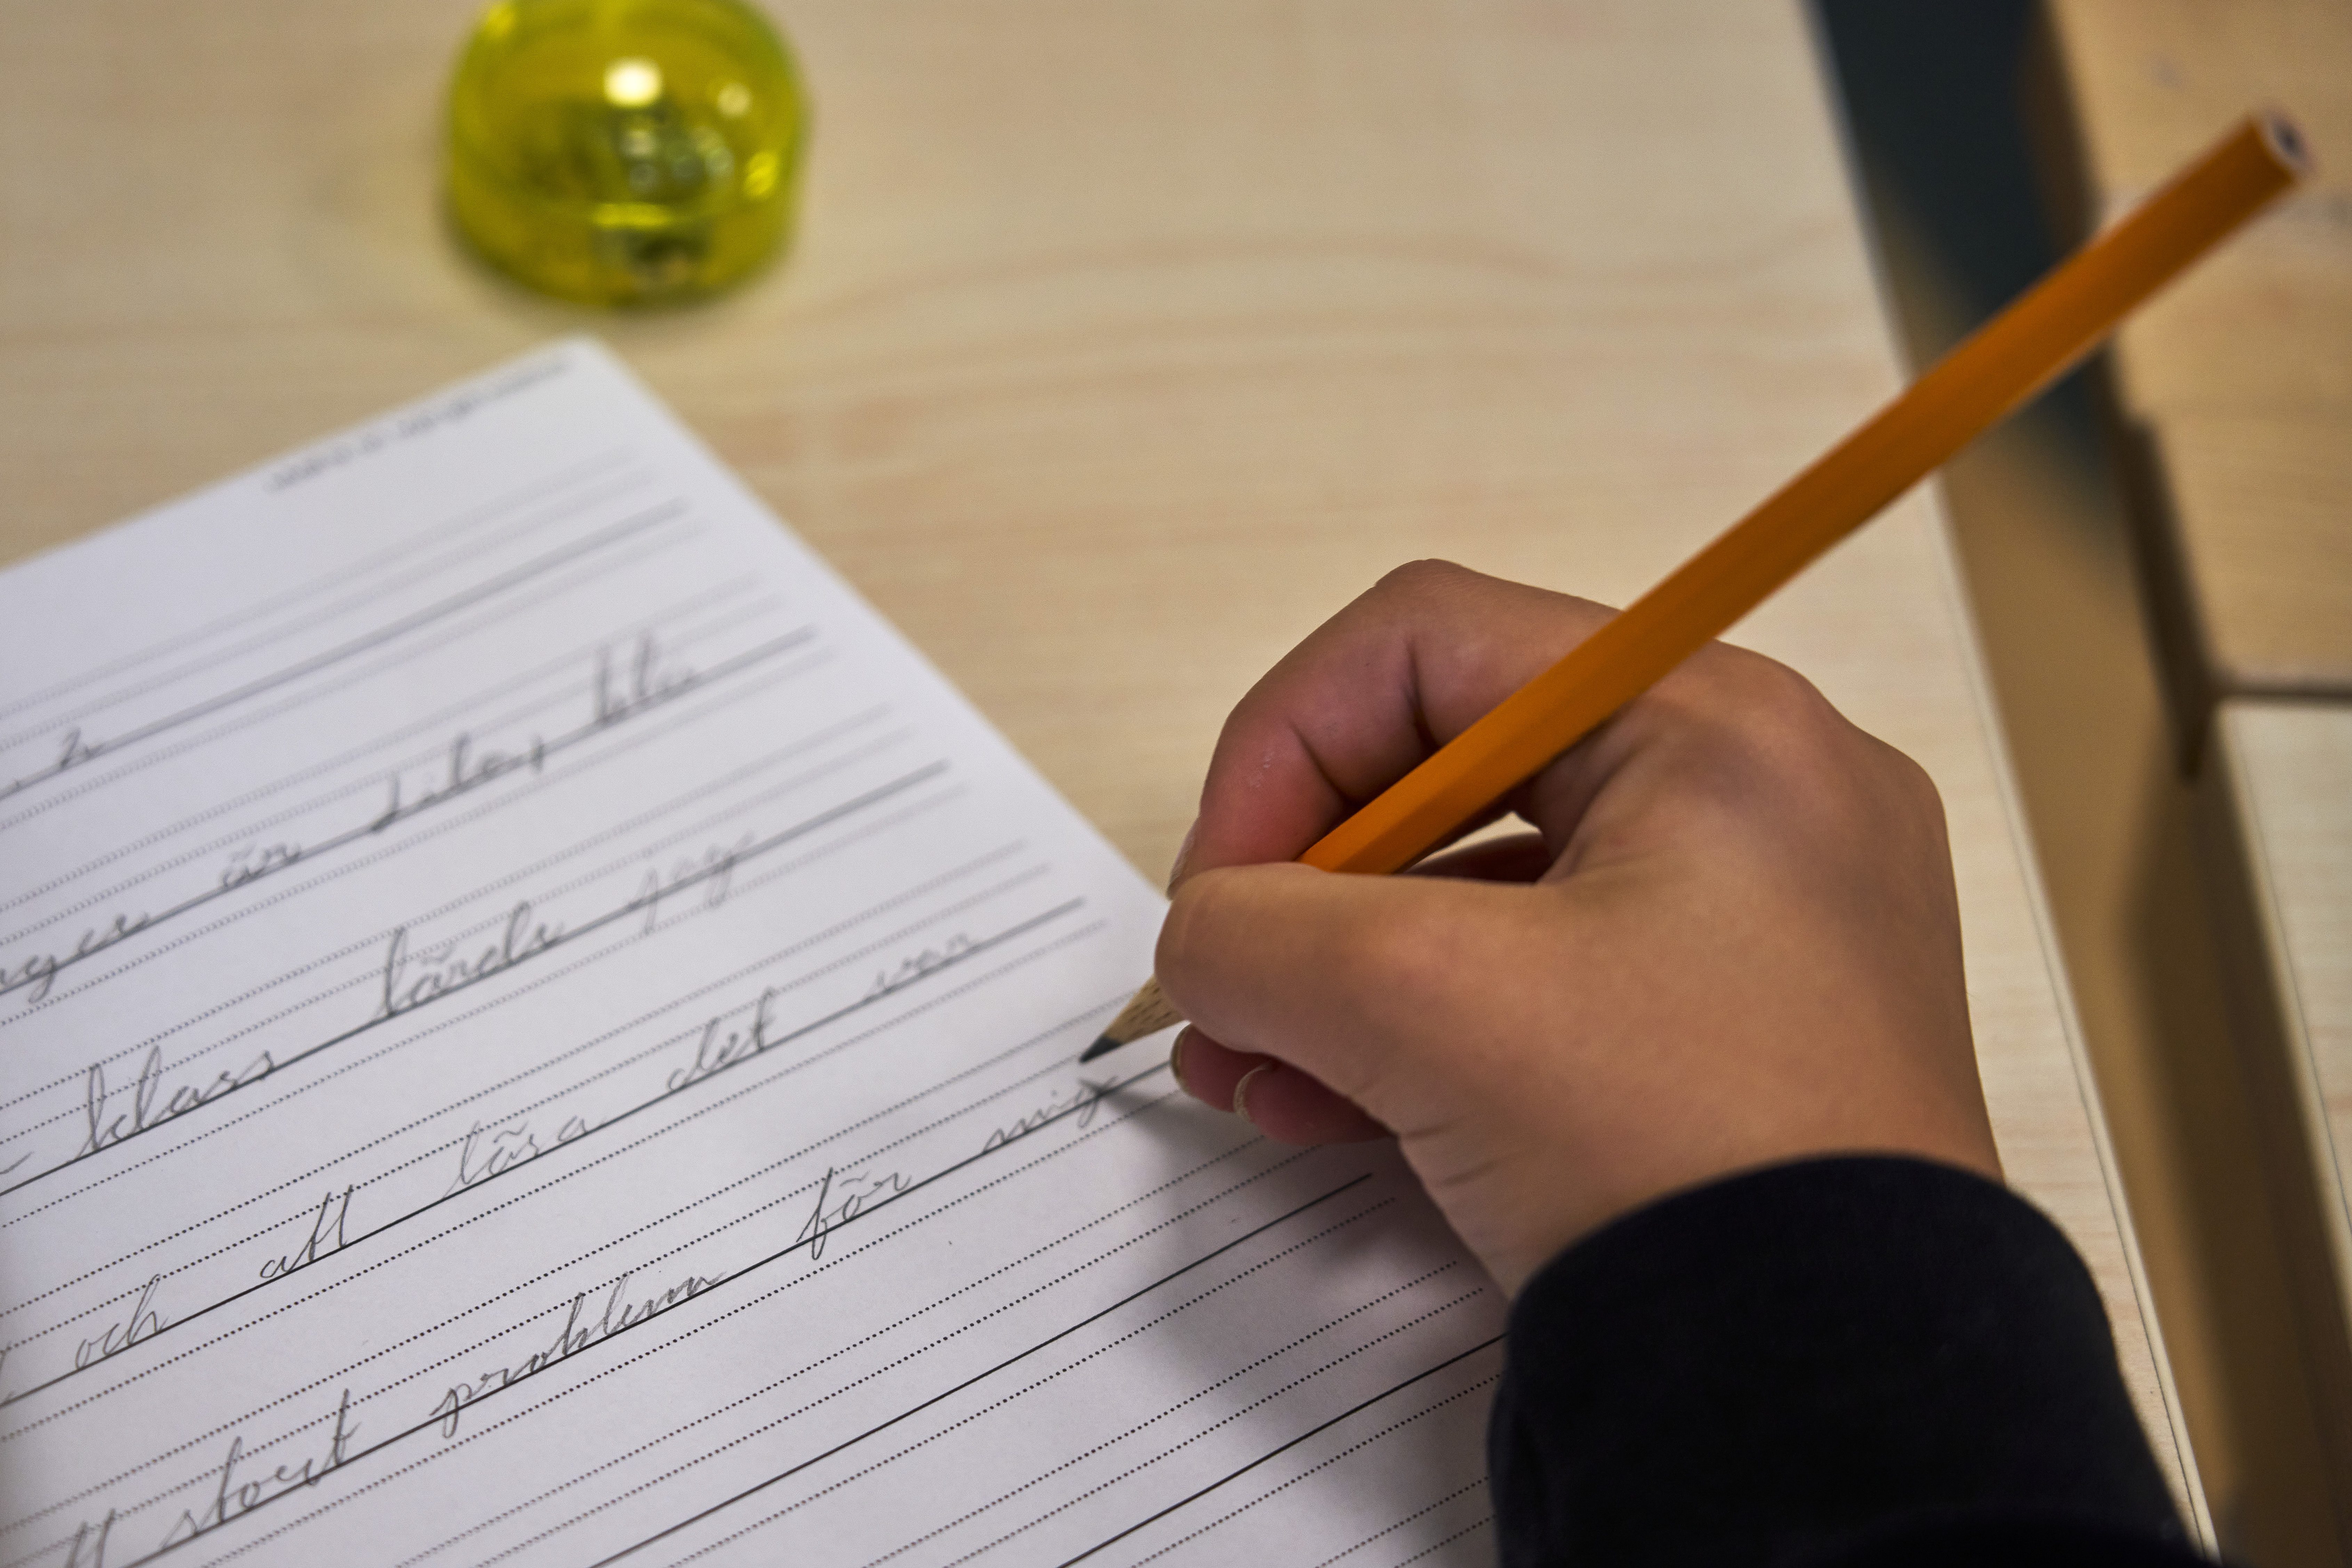 Handwriting - Make It Neat! Handwriting Practice, Instruction, and